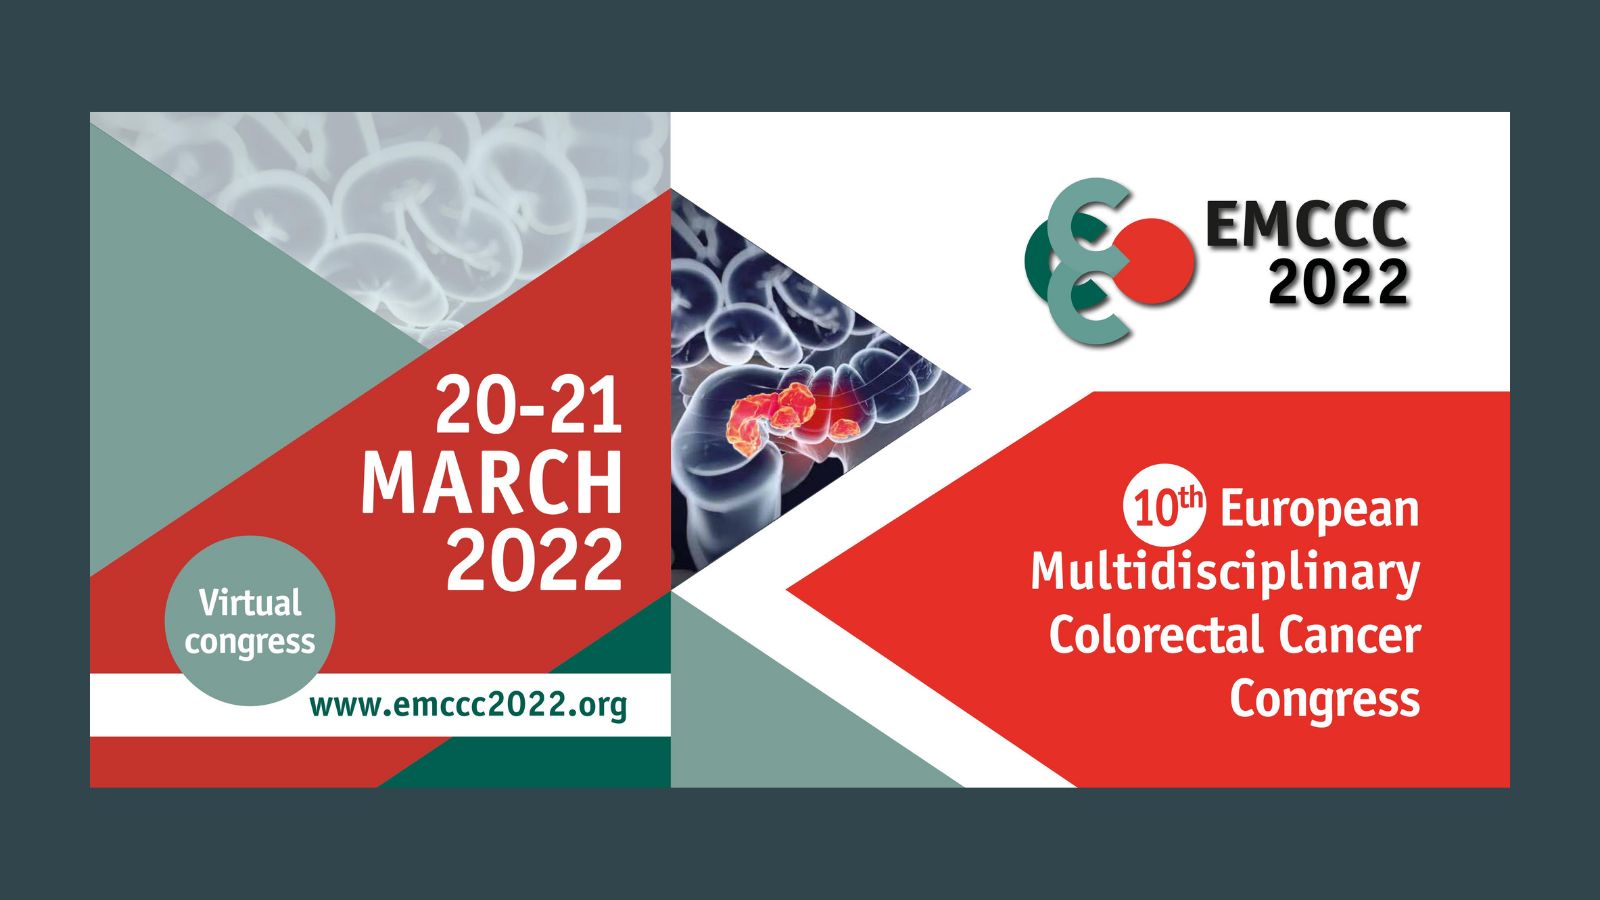 10th European Multidisciplinary Colorectal Cancer Congress, Online Event